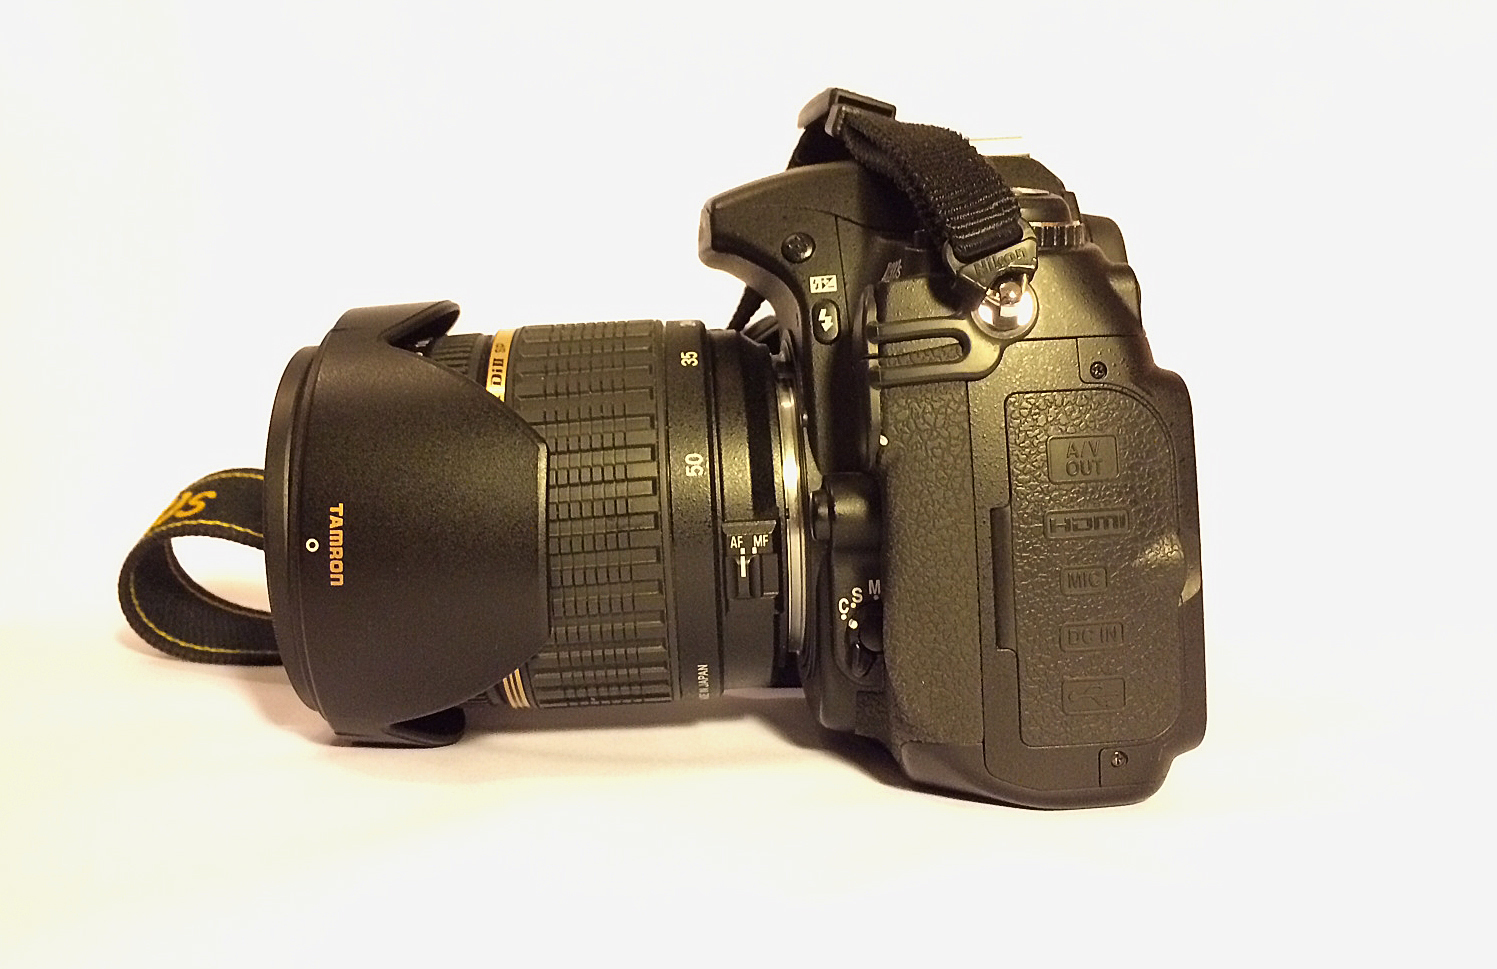  Satılık Nikon D300s + Tamron 17-50mm f2.8 (detaylı fotoğraflı) 2899 TL